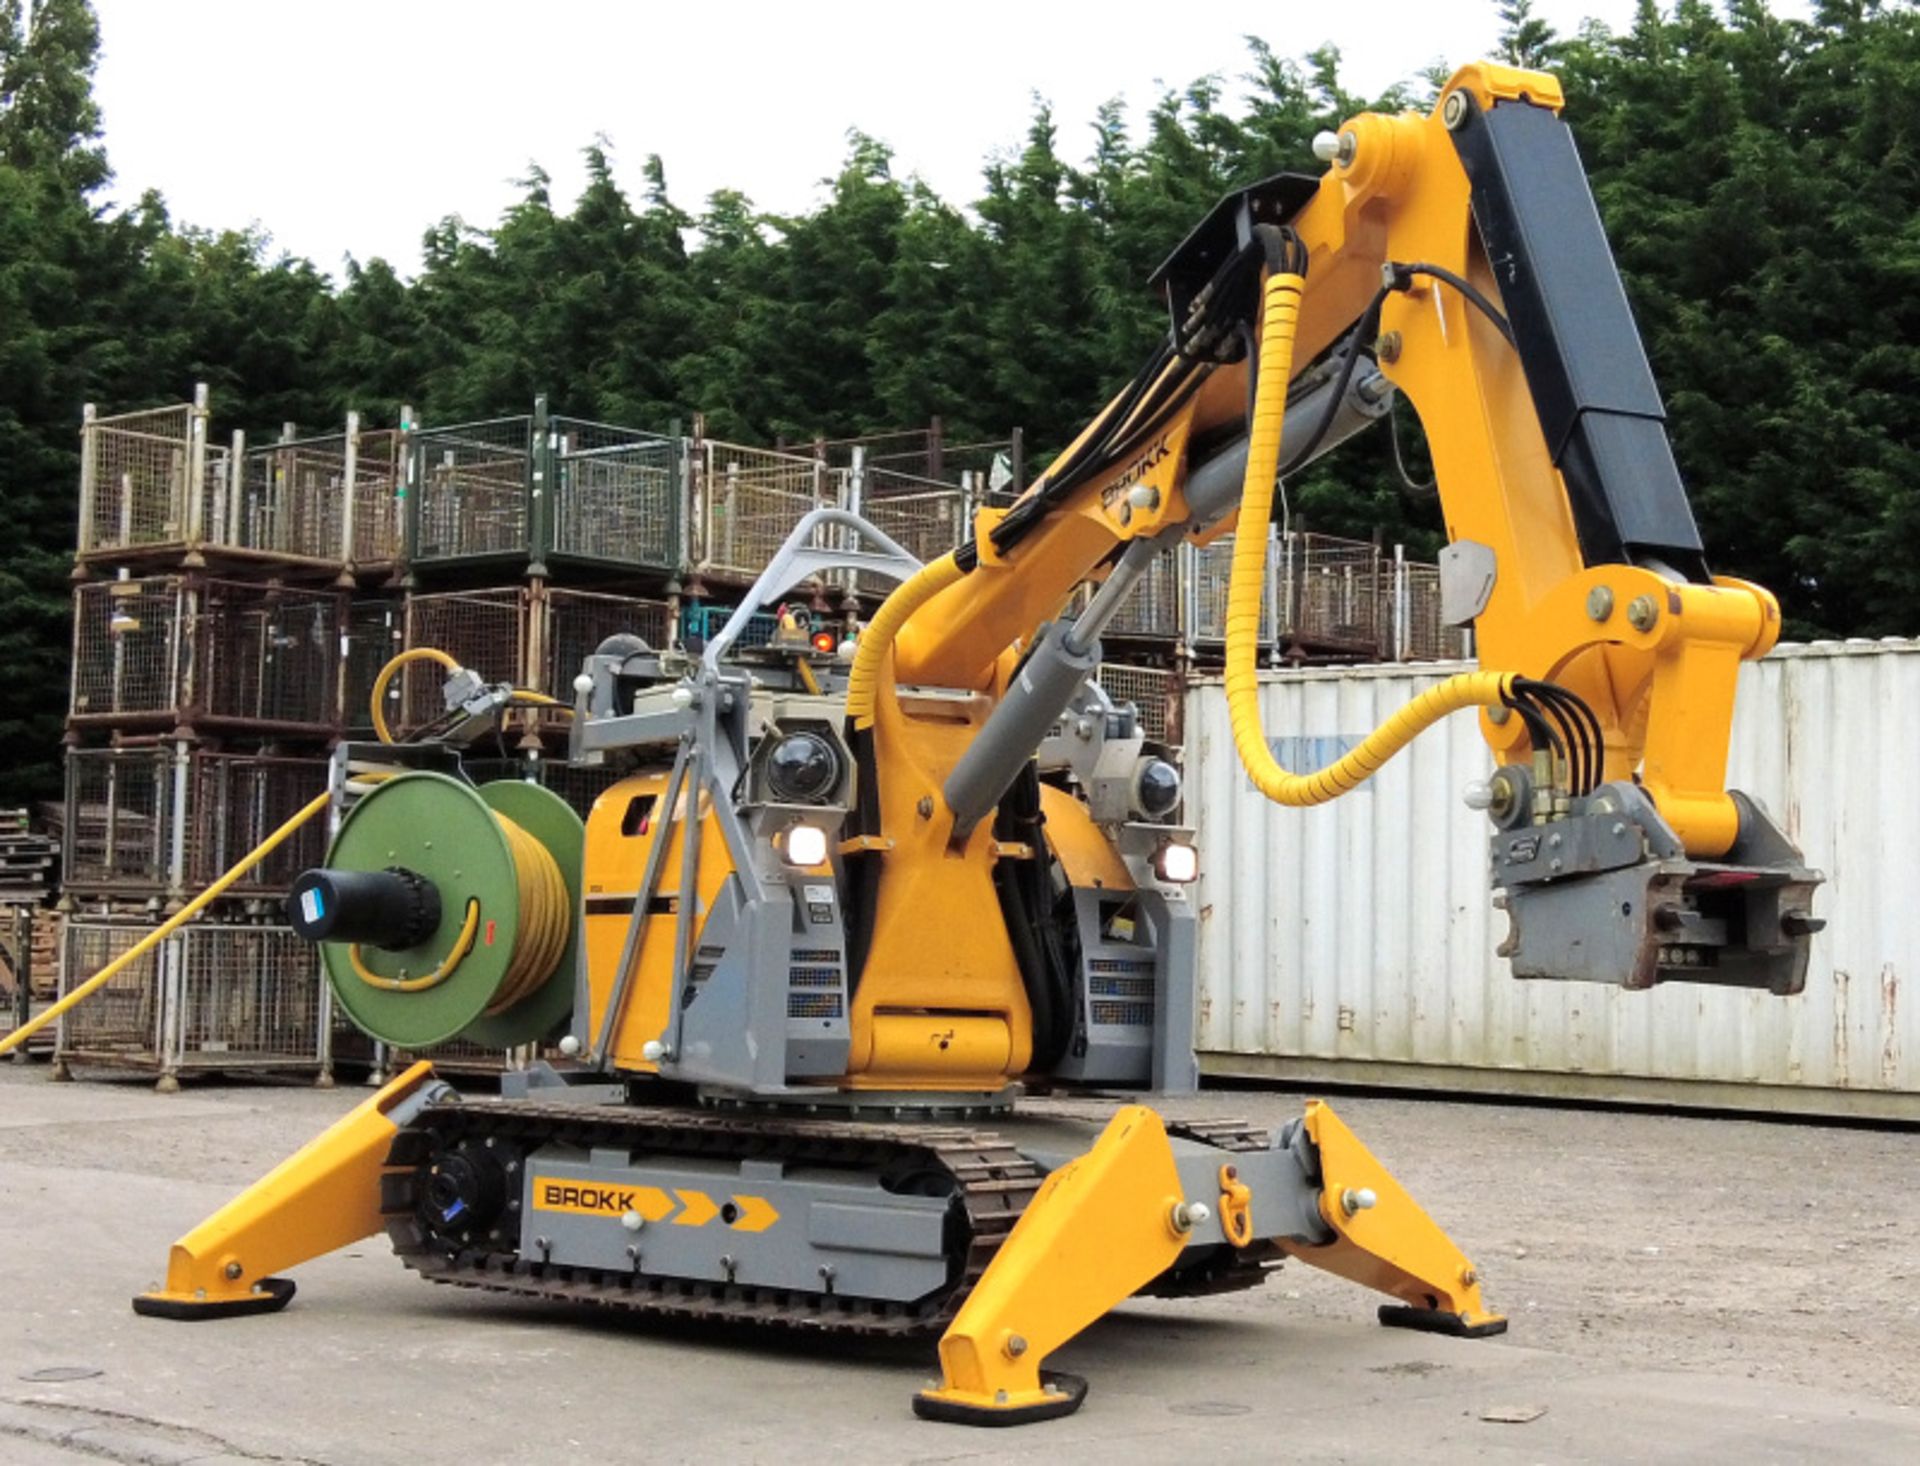 Brokk 330 Robotic Demolition Machine with attachments & accessories (see description) - Image 9 of 93